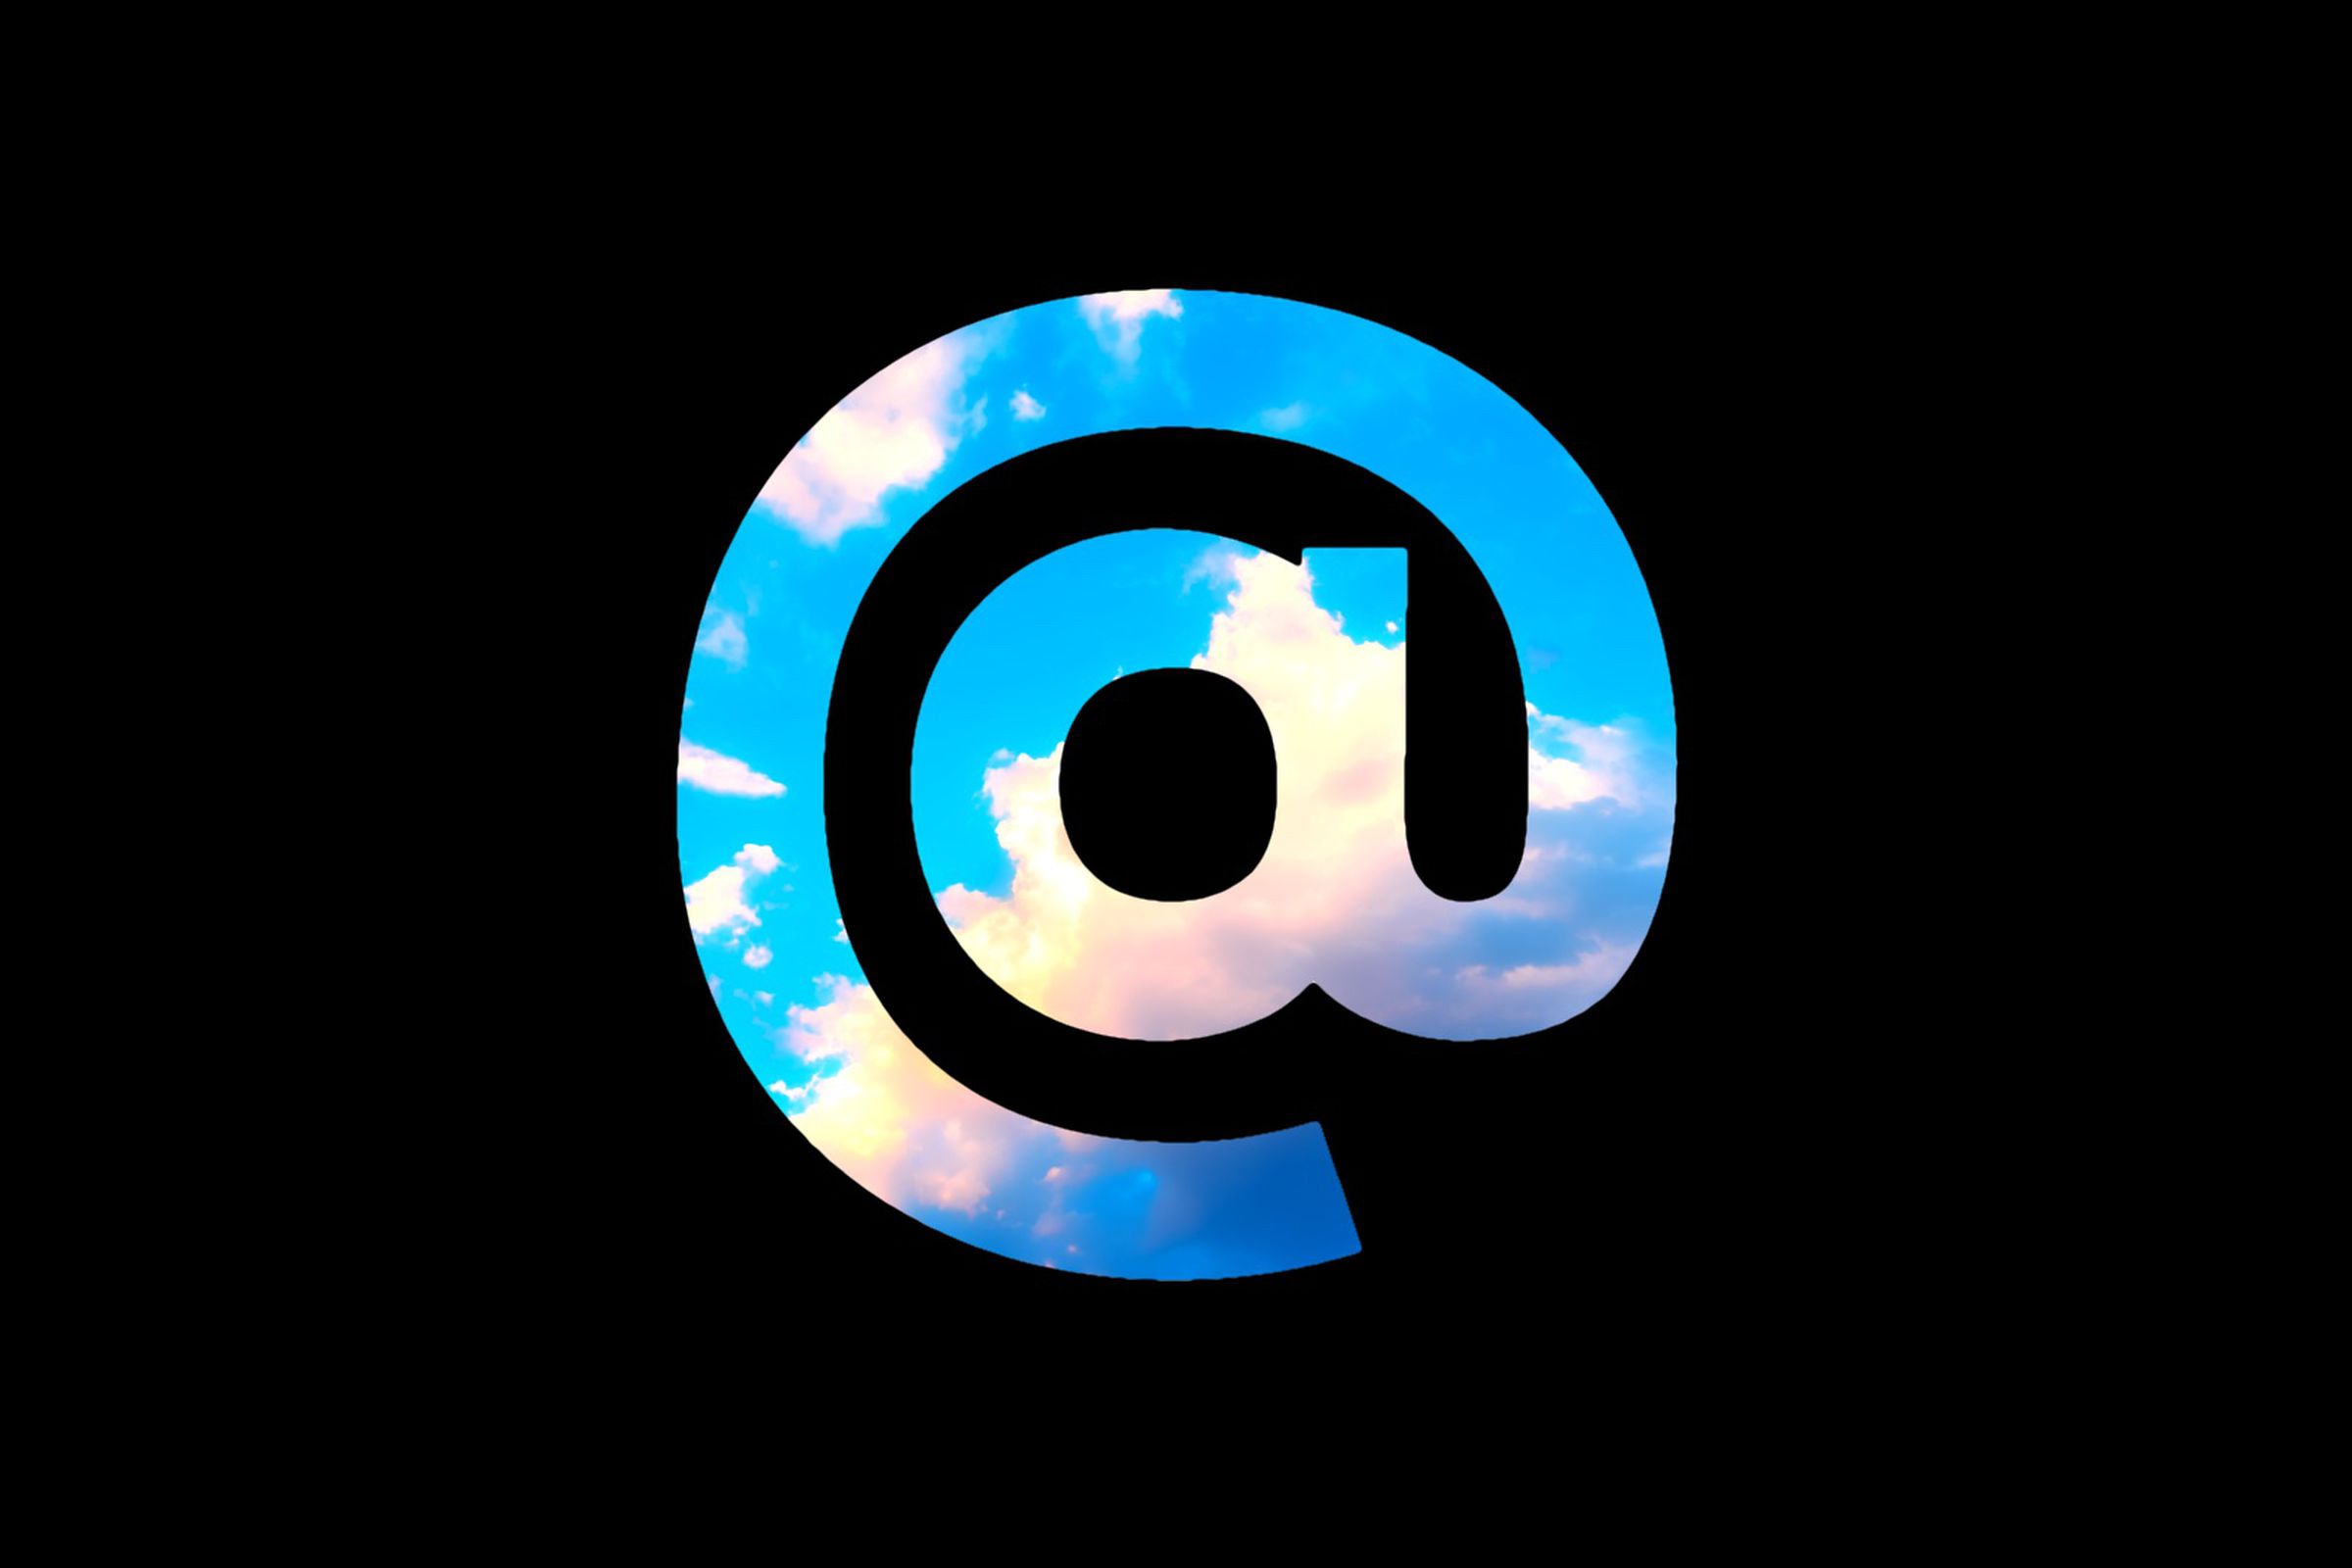 The AT Protocol’s @-symbol logo.